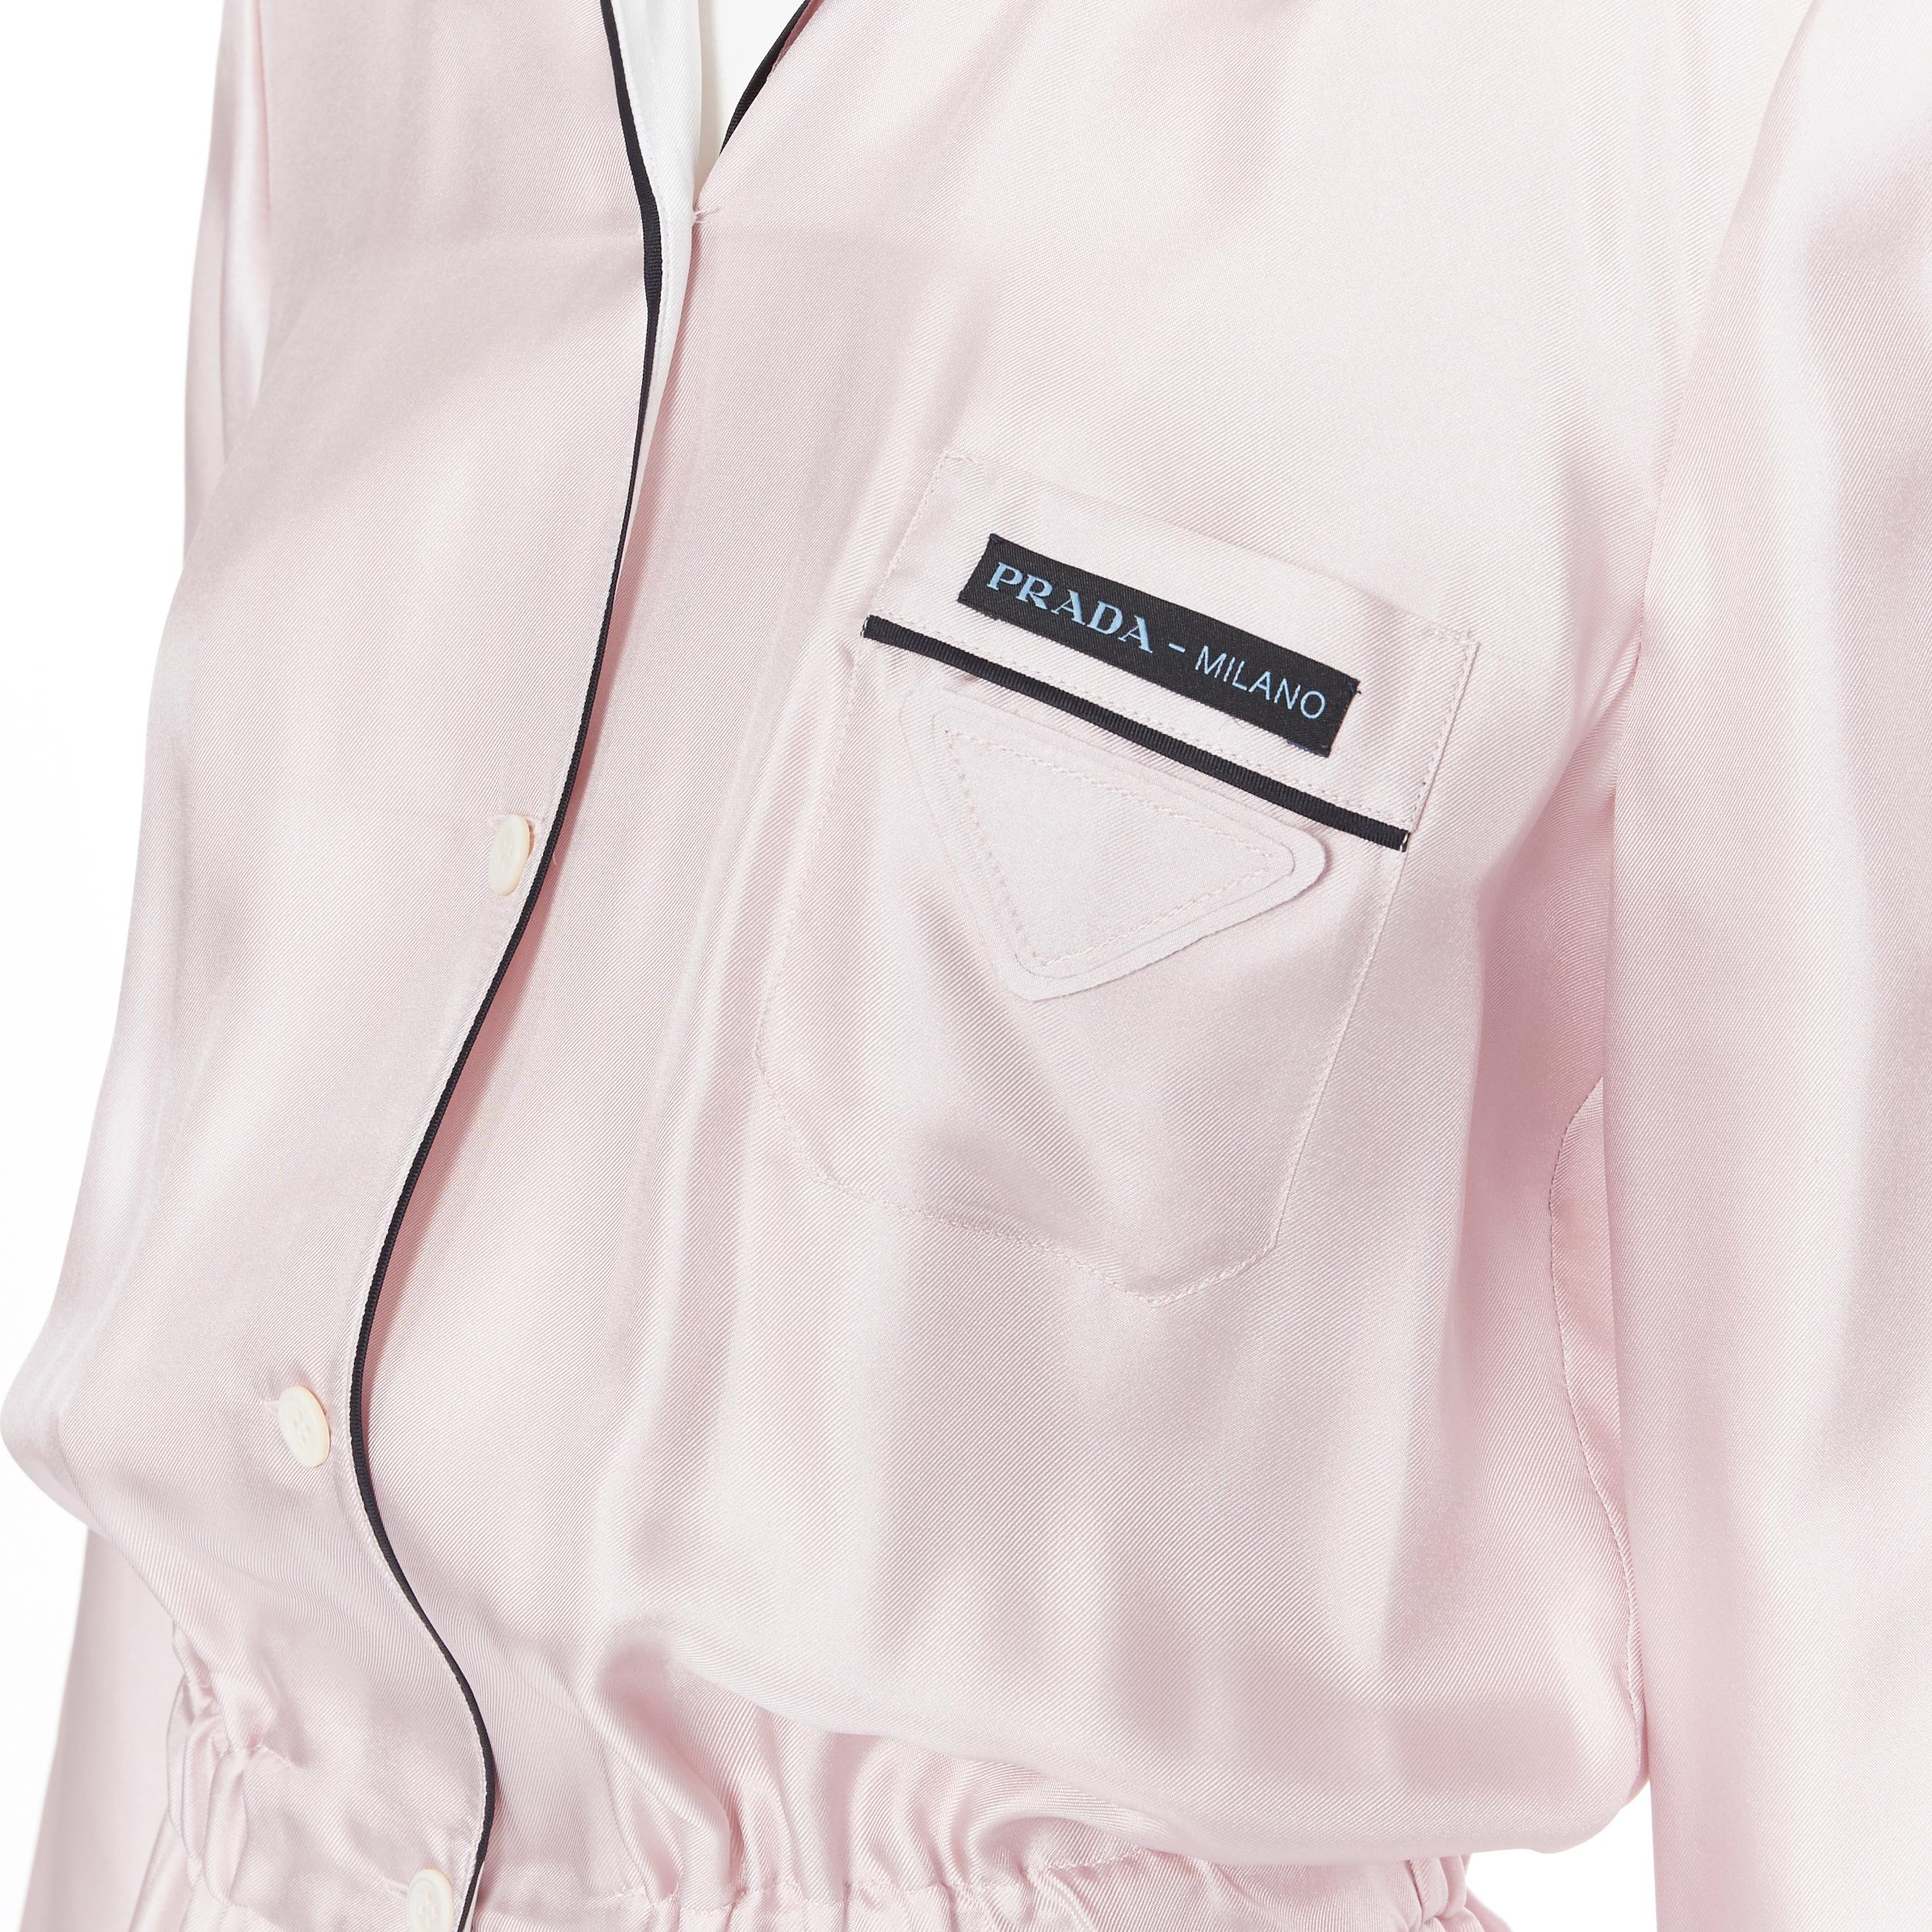 new PRADA 100% silk triangle logo pocket lounge wear pyjama style jumpsuit IT38
Brand: Prada
Designer: Miuccia Prada
Model Name / Style: Silk jumpsuit
Material: Silk
Color: Pink
Pattern: Solid
Closure: Button
Extra Detail: Signature Prada logo tab